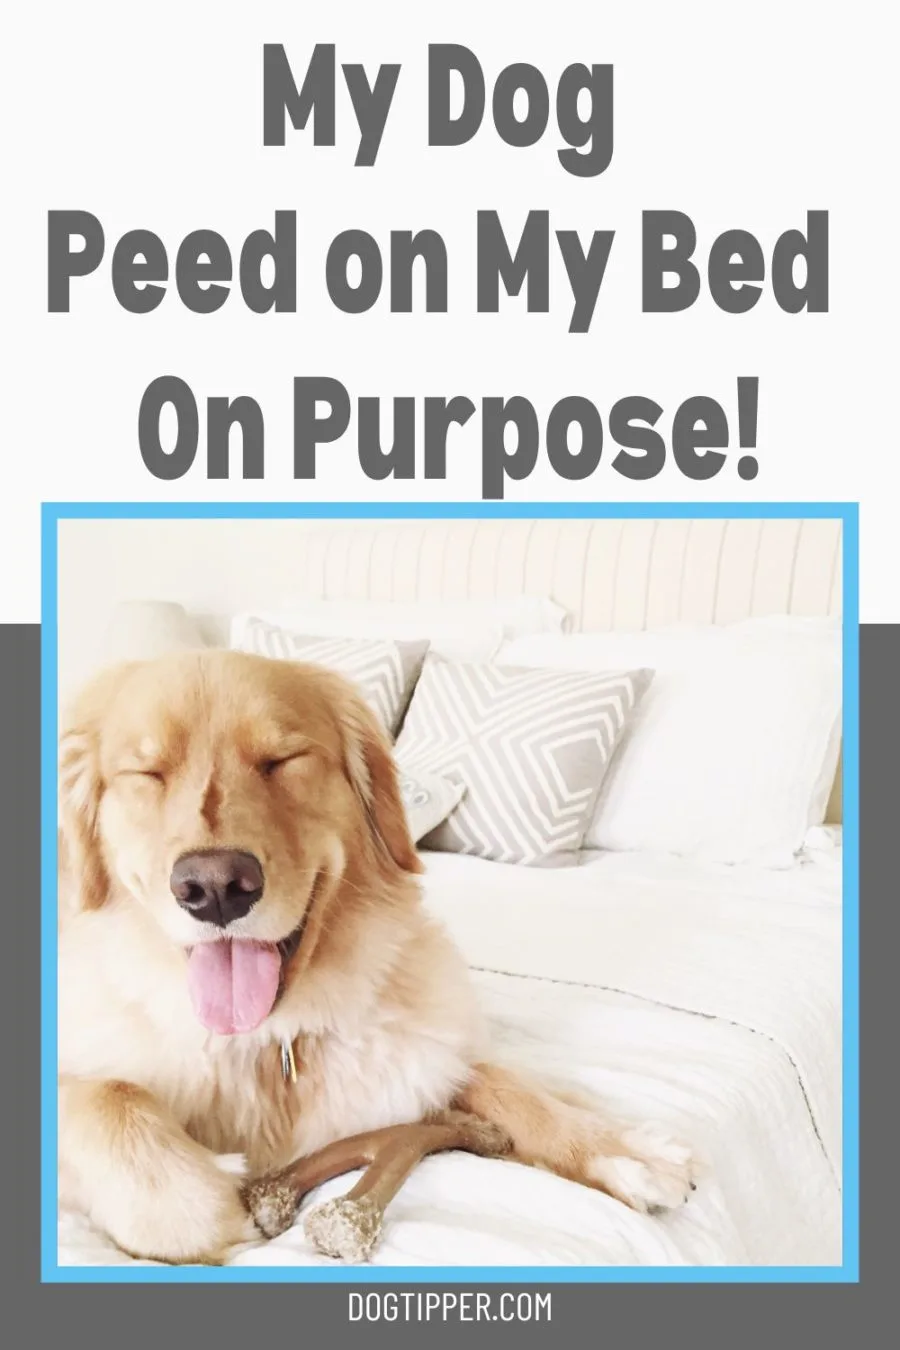 My Dog Peed on My Bed on Purpose!